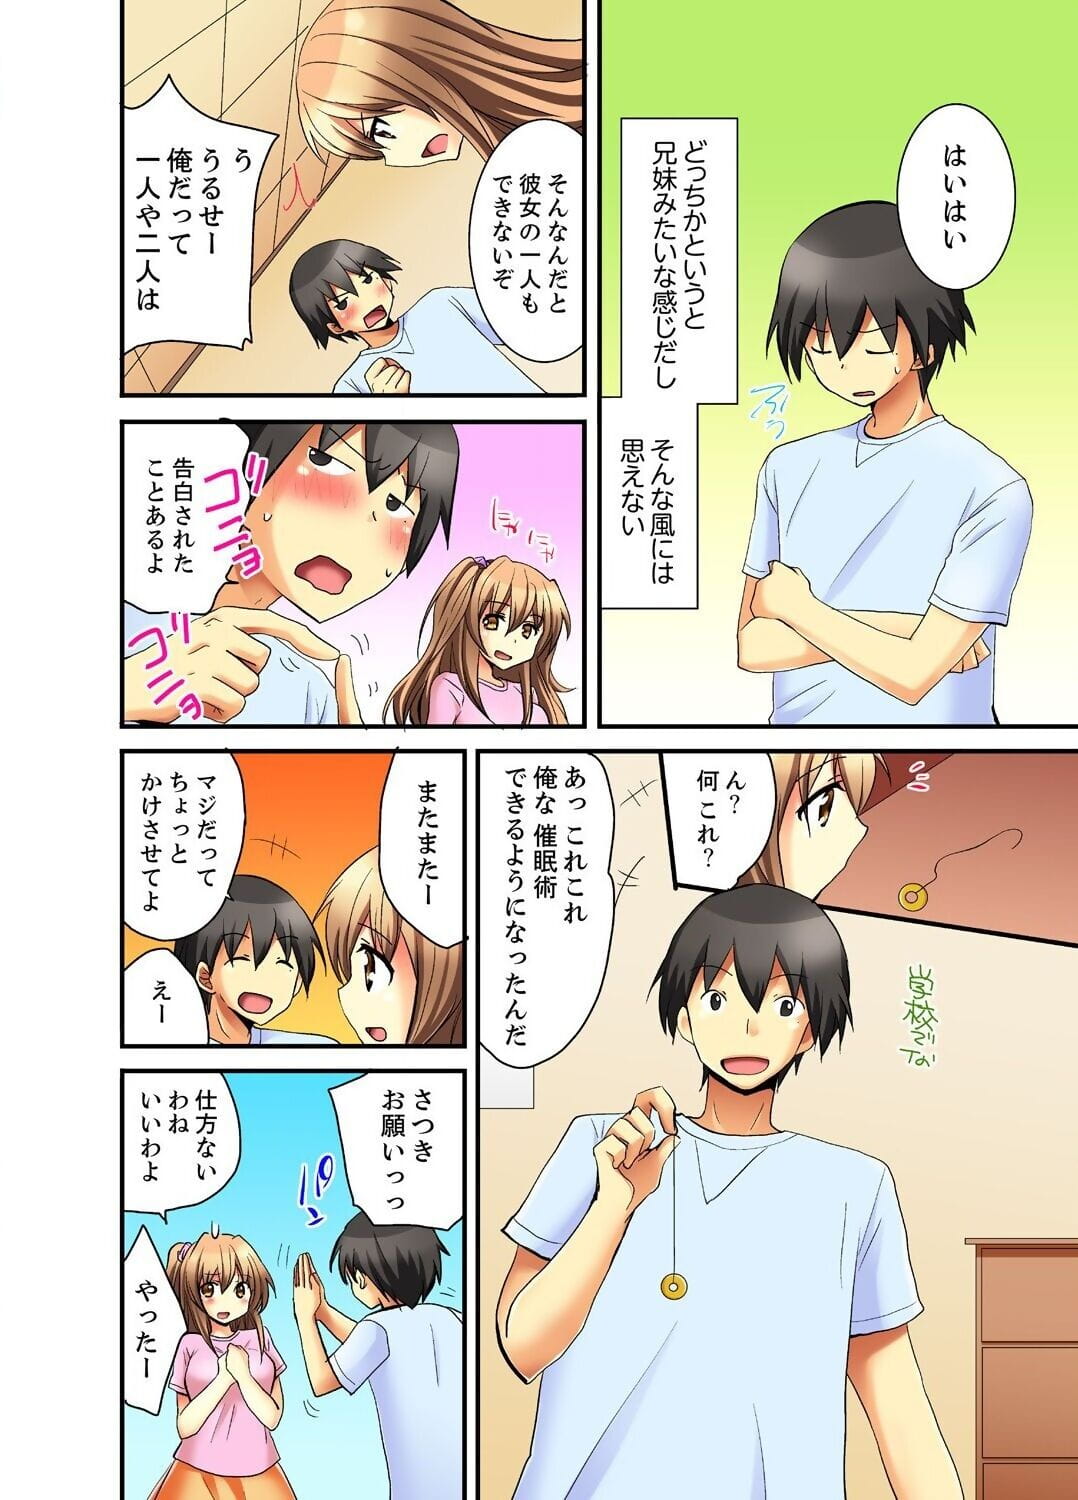 kanjiyasui osanajimi करने के लिए saimi h!? page 1